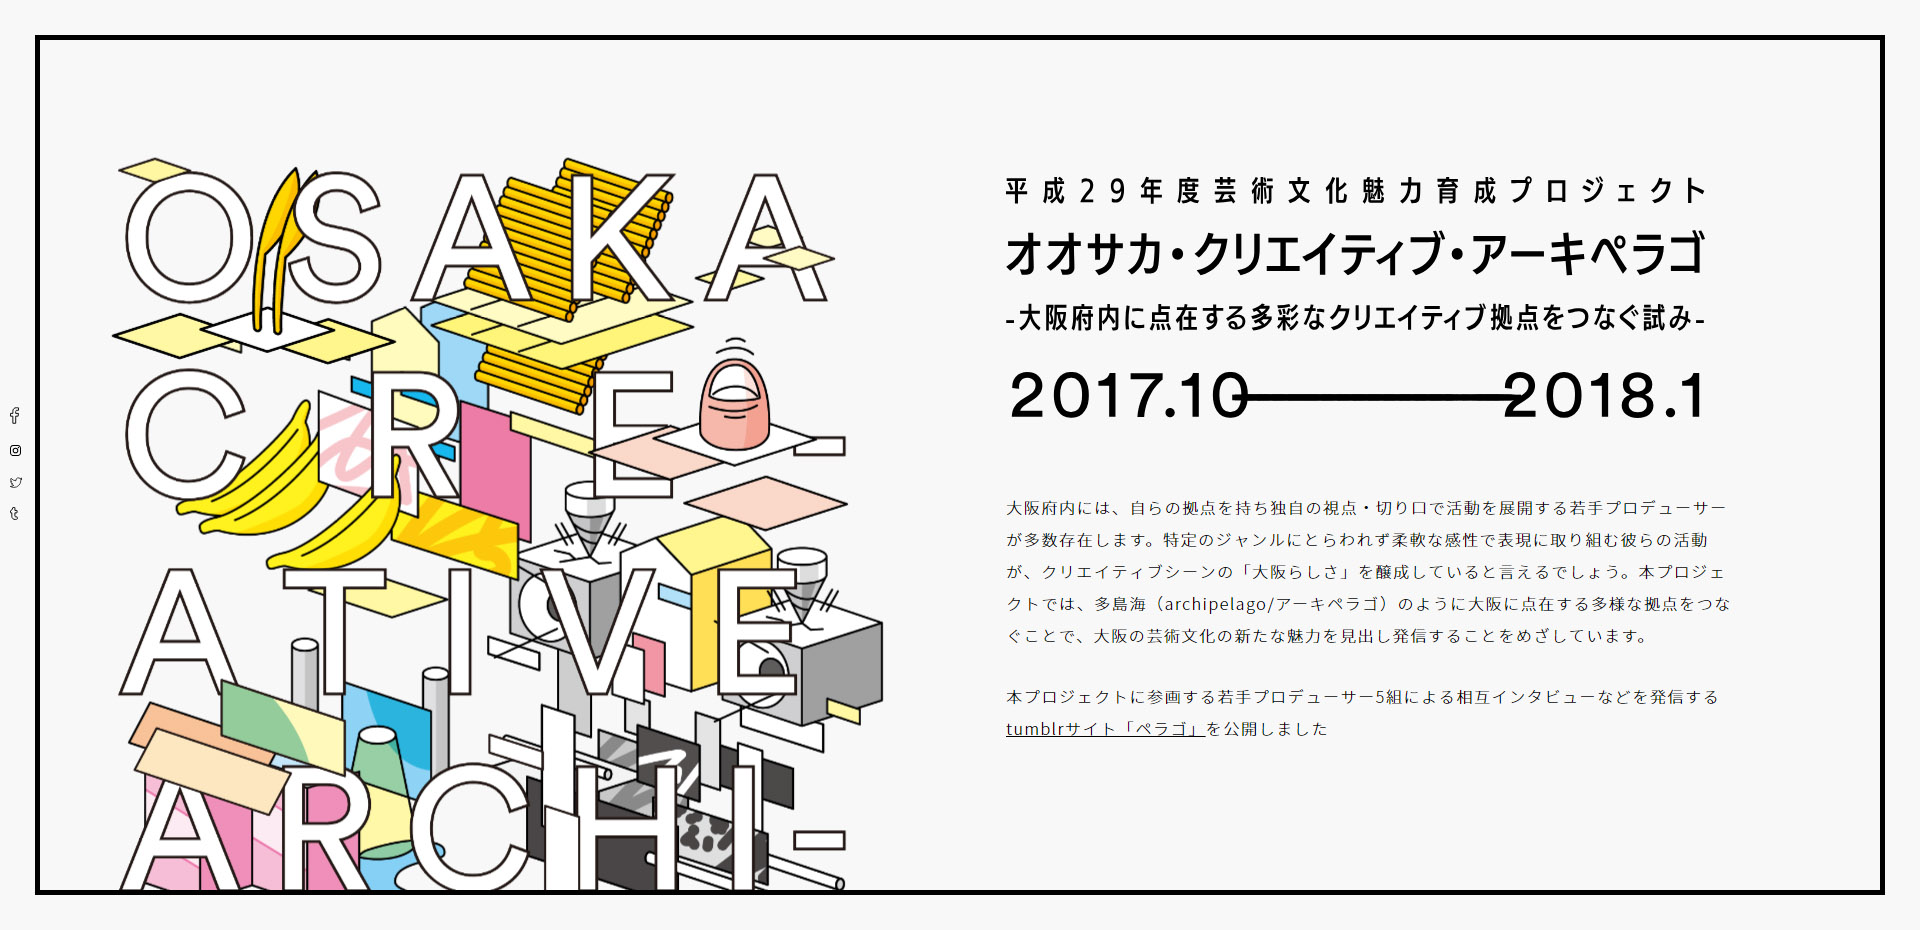 ​  「Osaka Creative Archipelago（オオサカ・クリエイティブ・アーキペラゴ）-大阪府内に点在する多彩なクリエイティブ拠点をつなぐ試み-」公式サイト（https://c-archipelago.osaka-artscouncil.jp/）より  ​